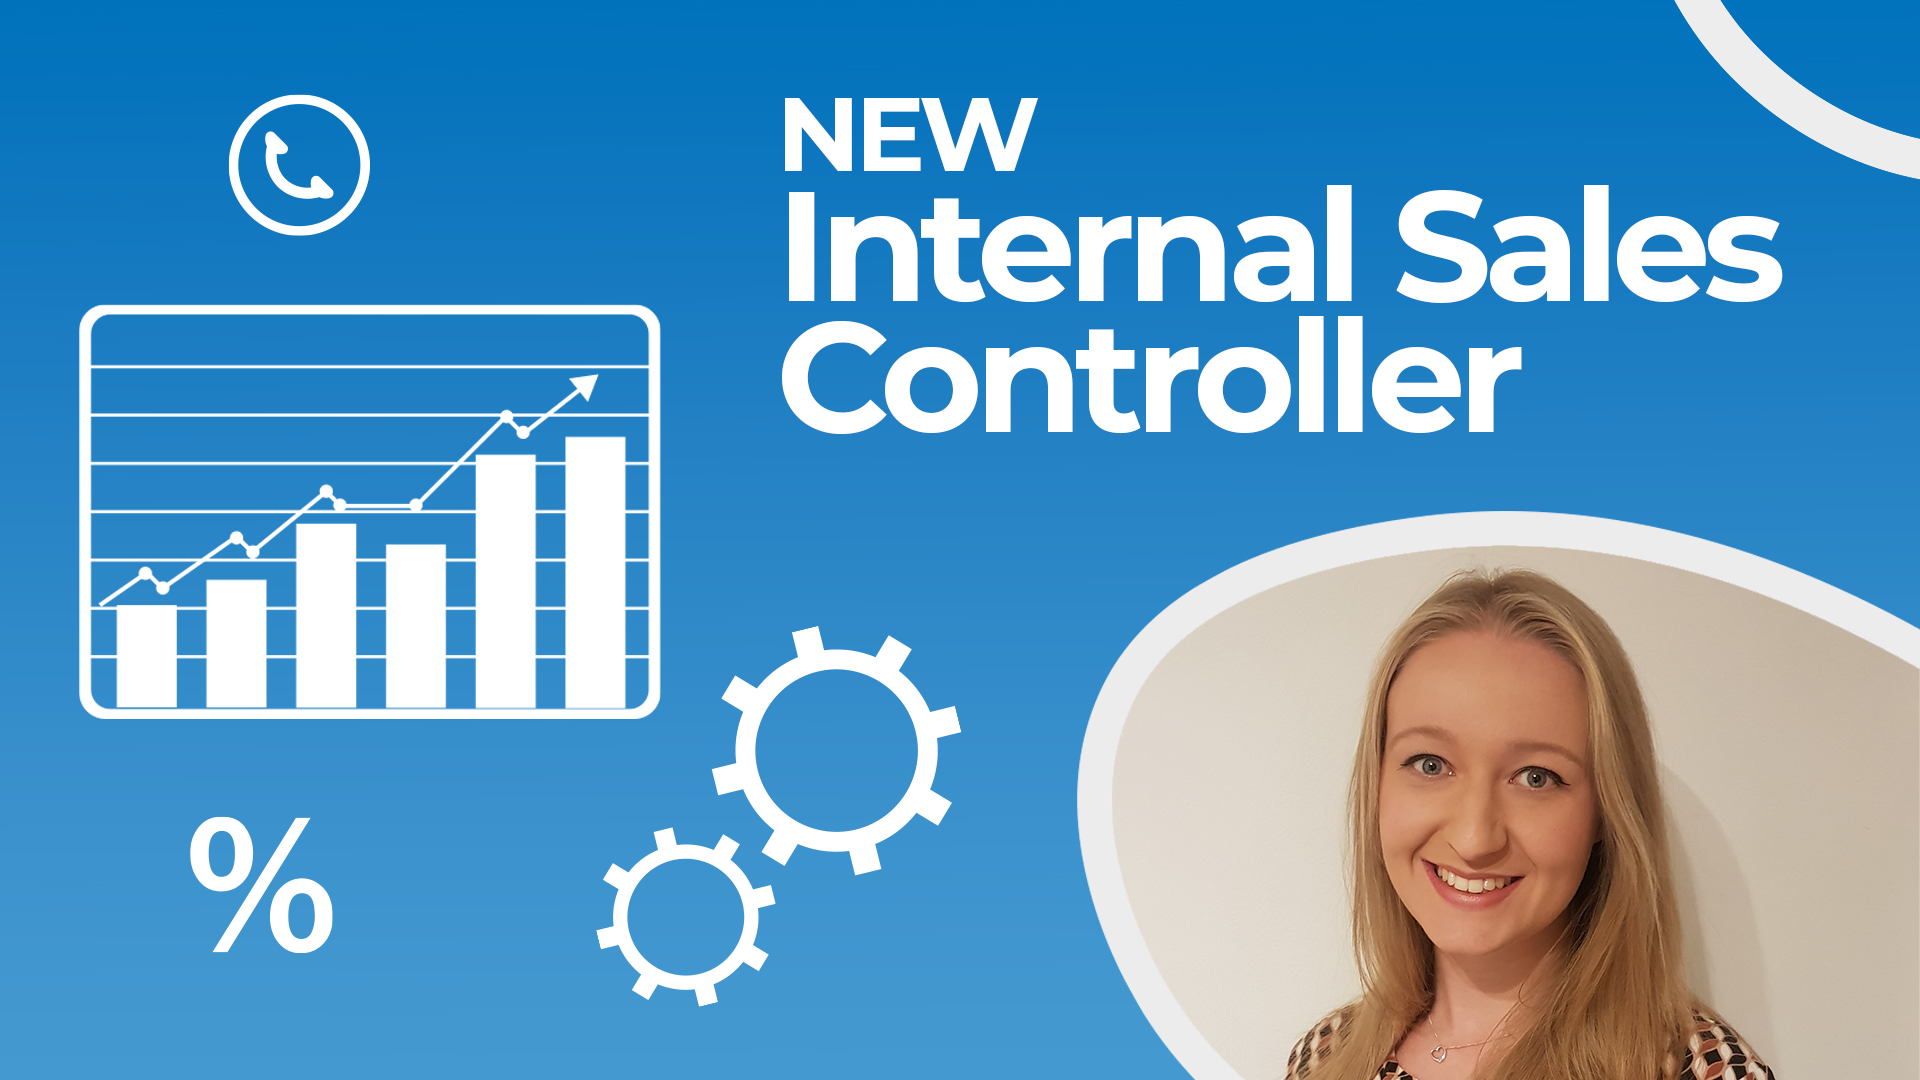 Meet Alice: The New Internal Sales Controller